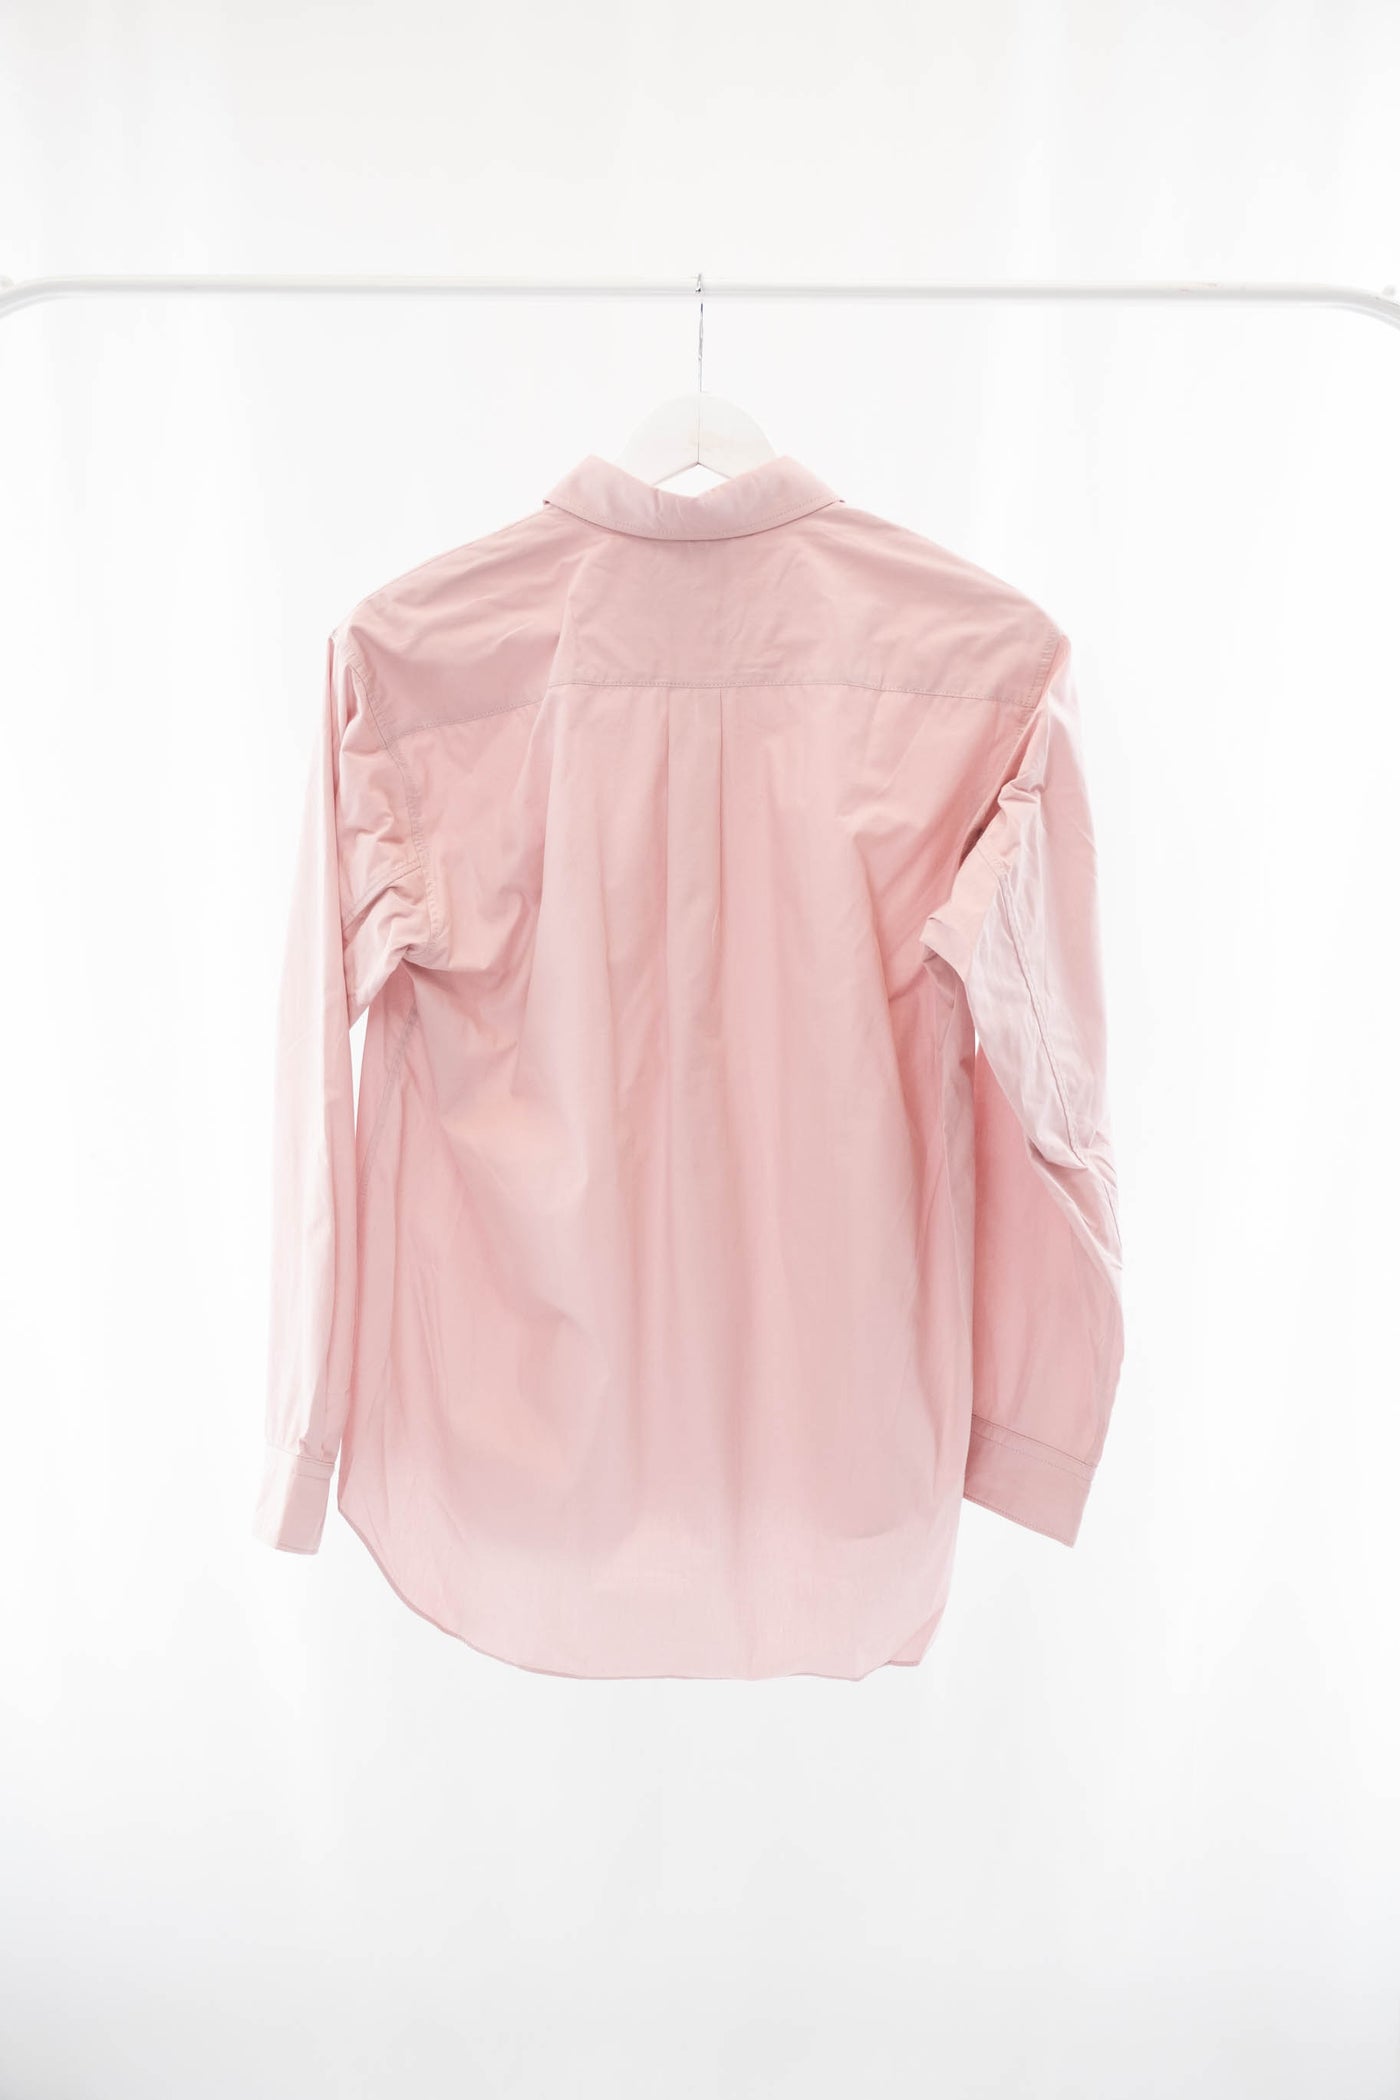 Camisa rosa (NUEVO)